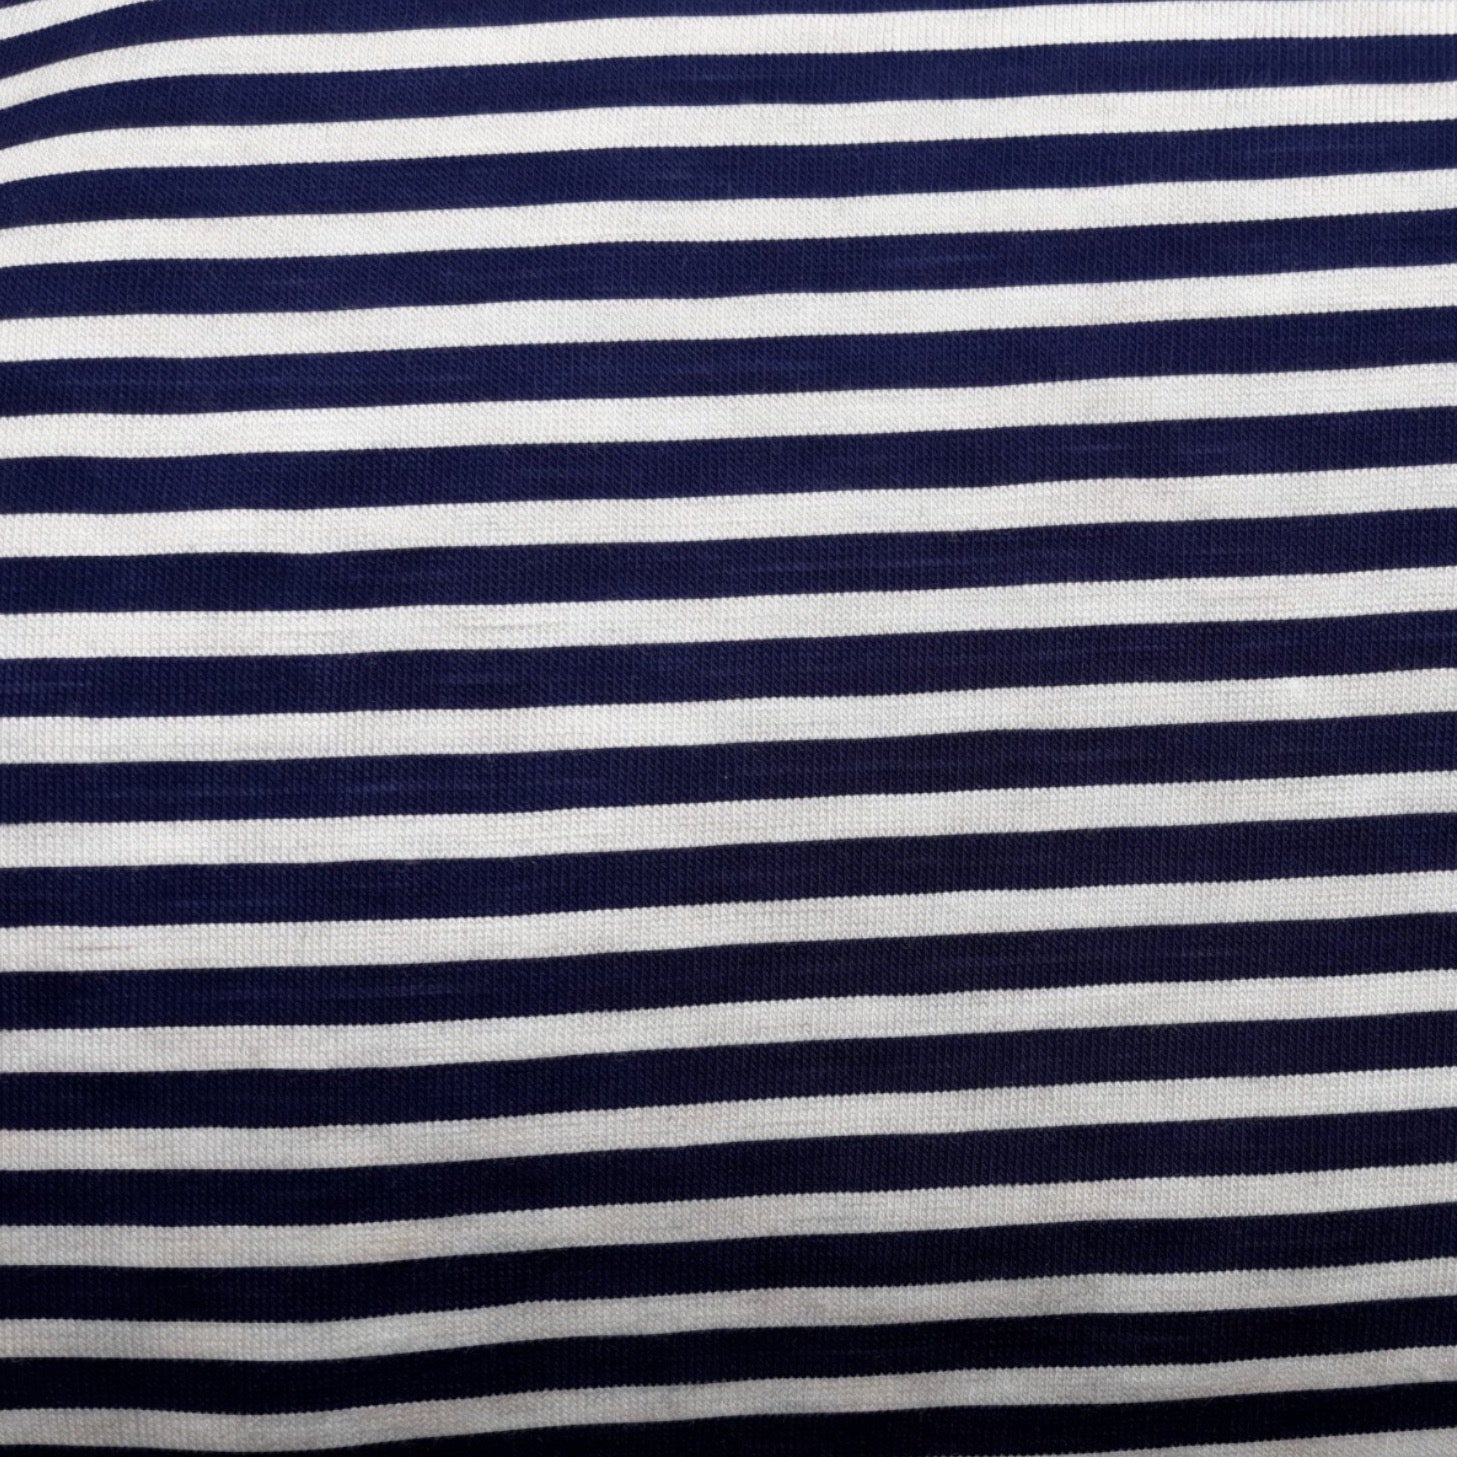 stretch headwrap navy and white stripes